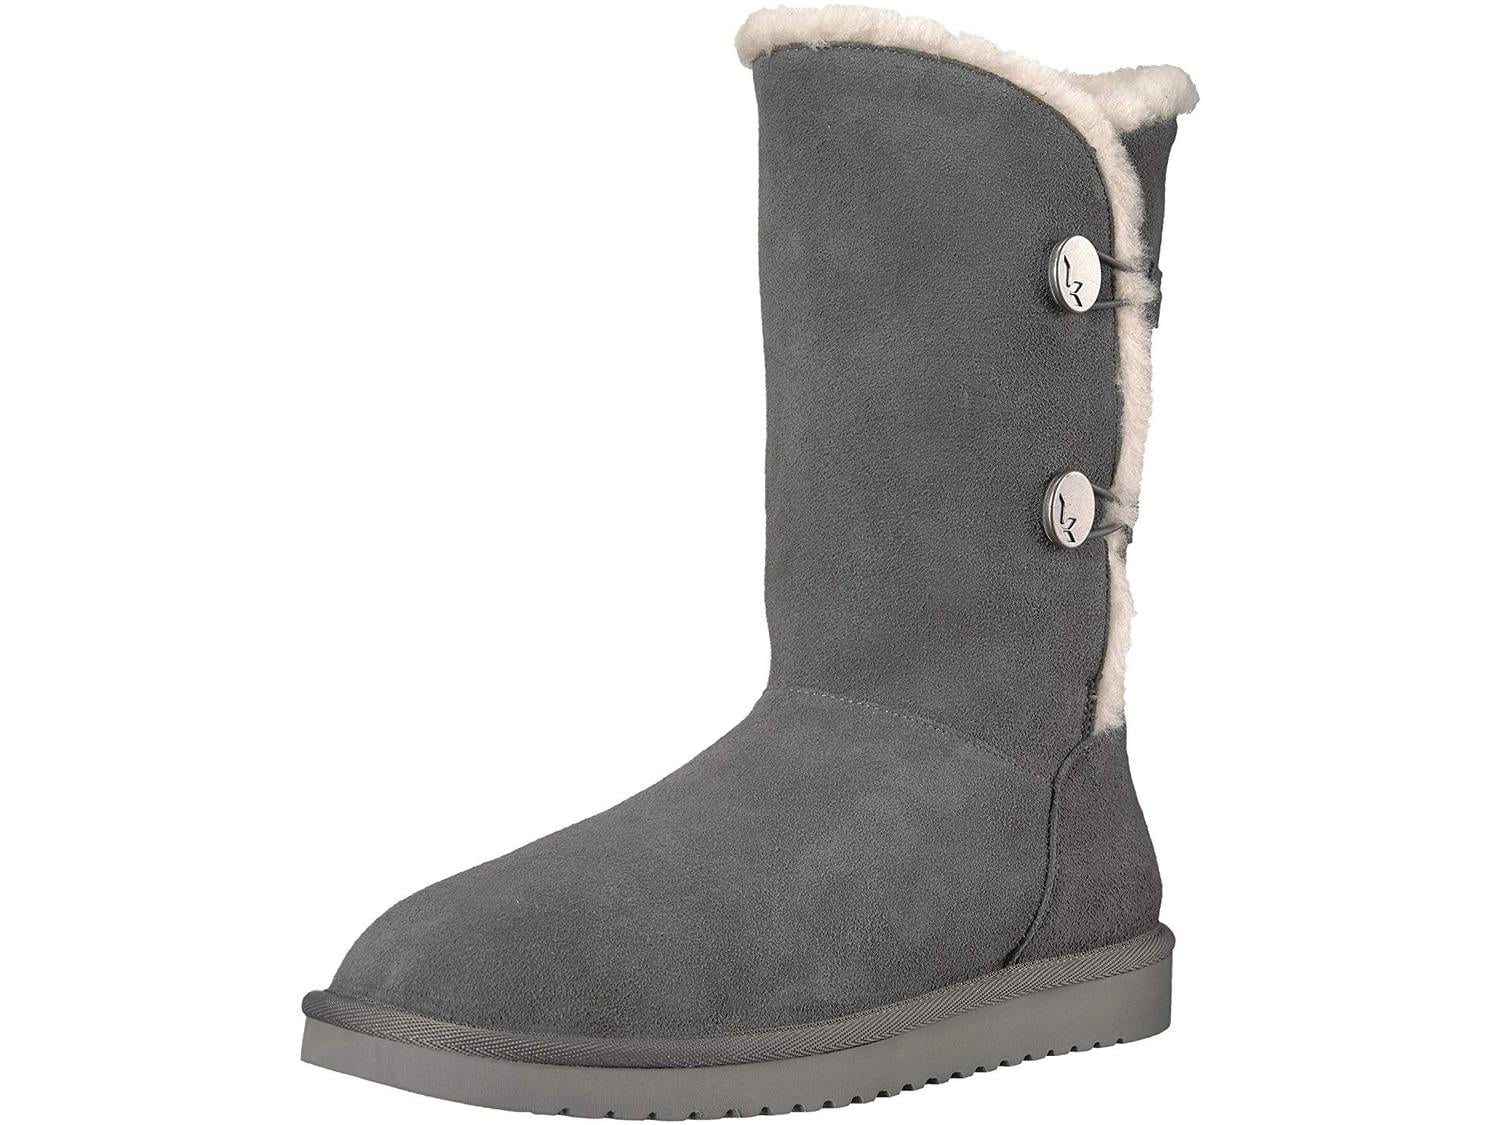 gray koolaburra boots